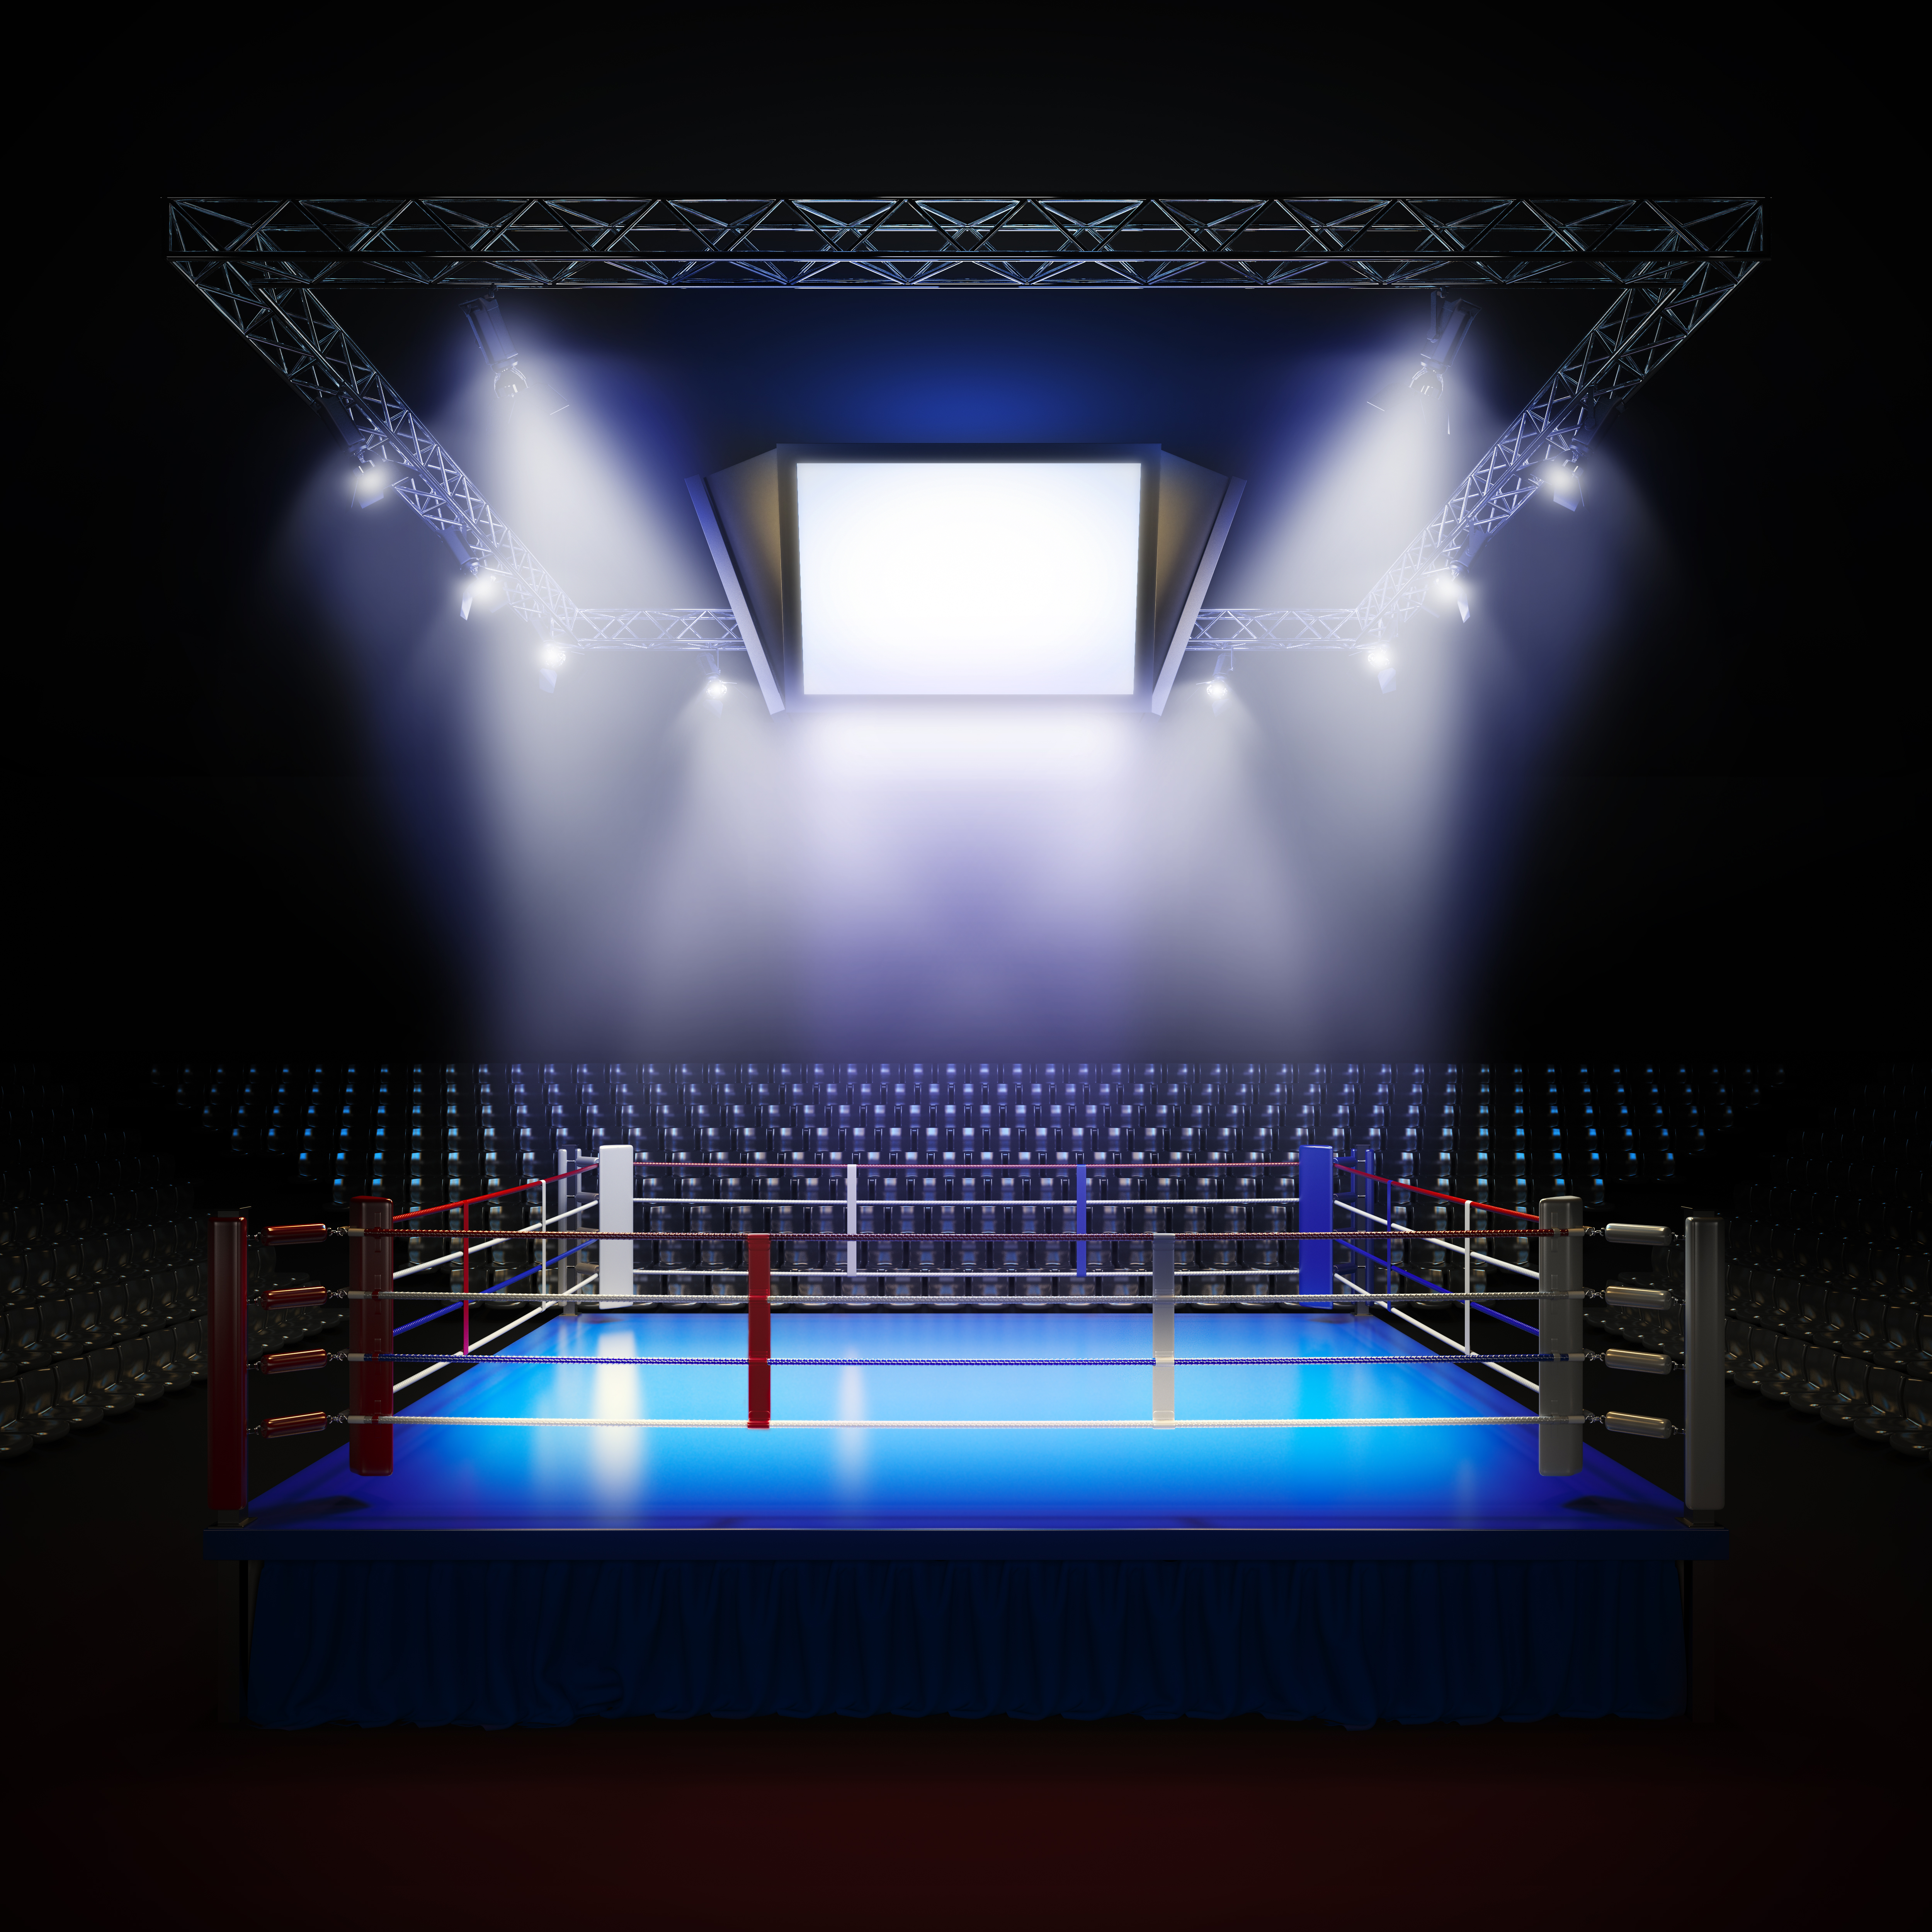 trade secrets fight - https://depositphotos.com/47368773/stock-photo-empty-professional-boxing-ring.html